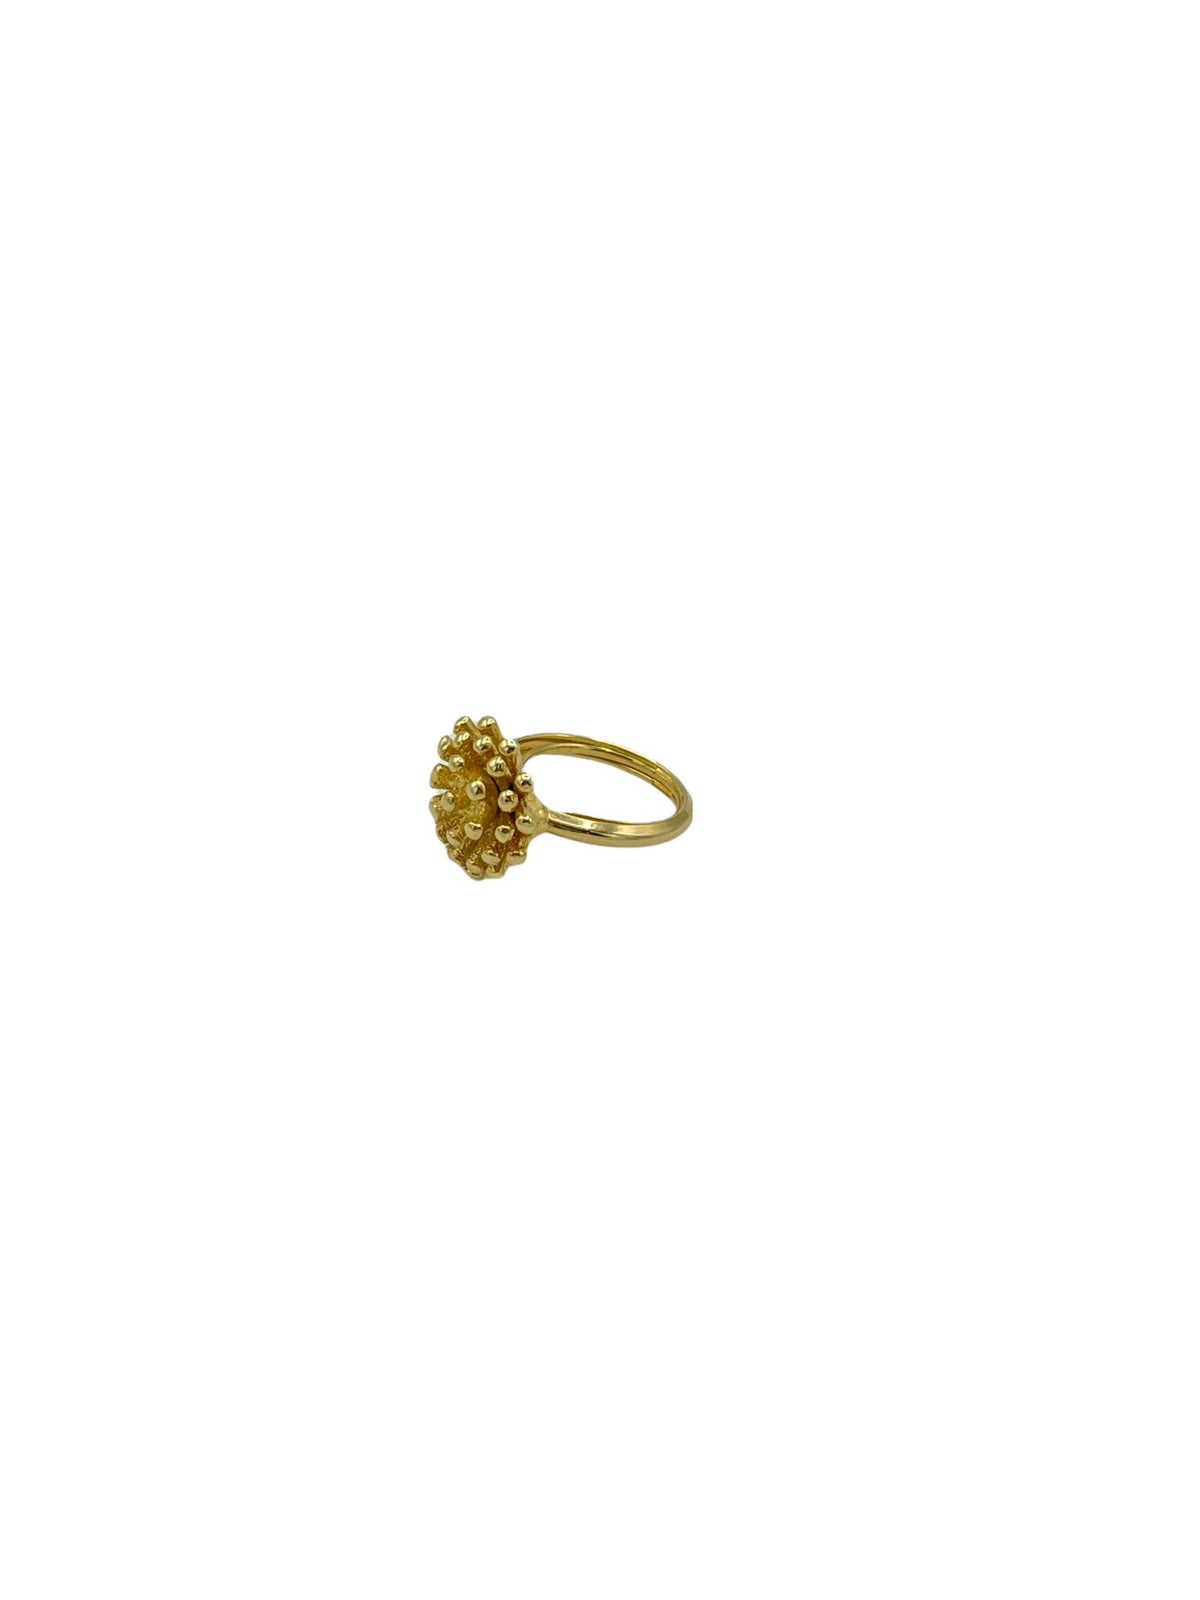 Avon Gold Starburst Vintage Adjustable Cocktail Ring - 24 Wishes Vintage Jewelry